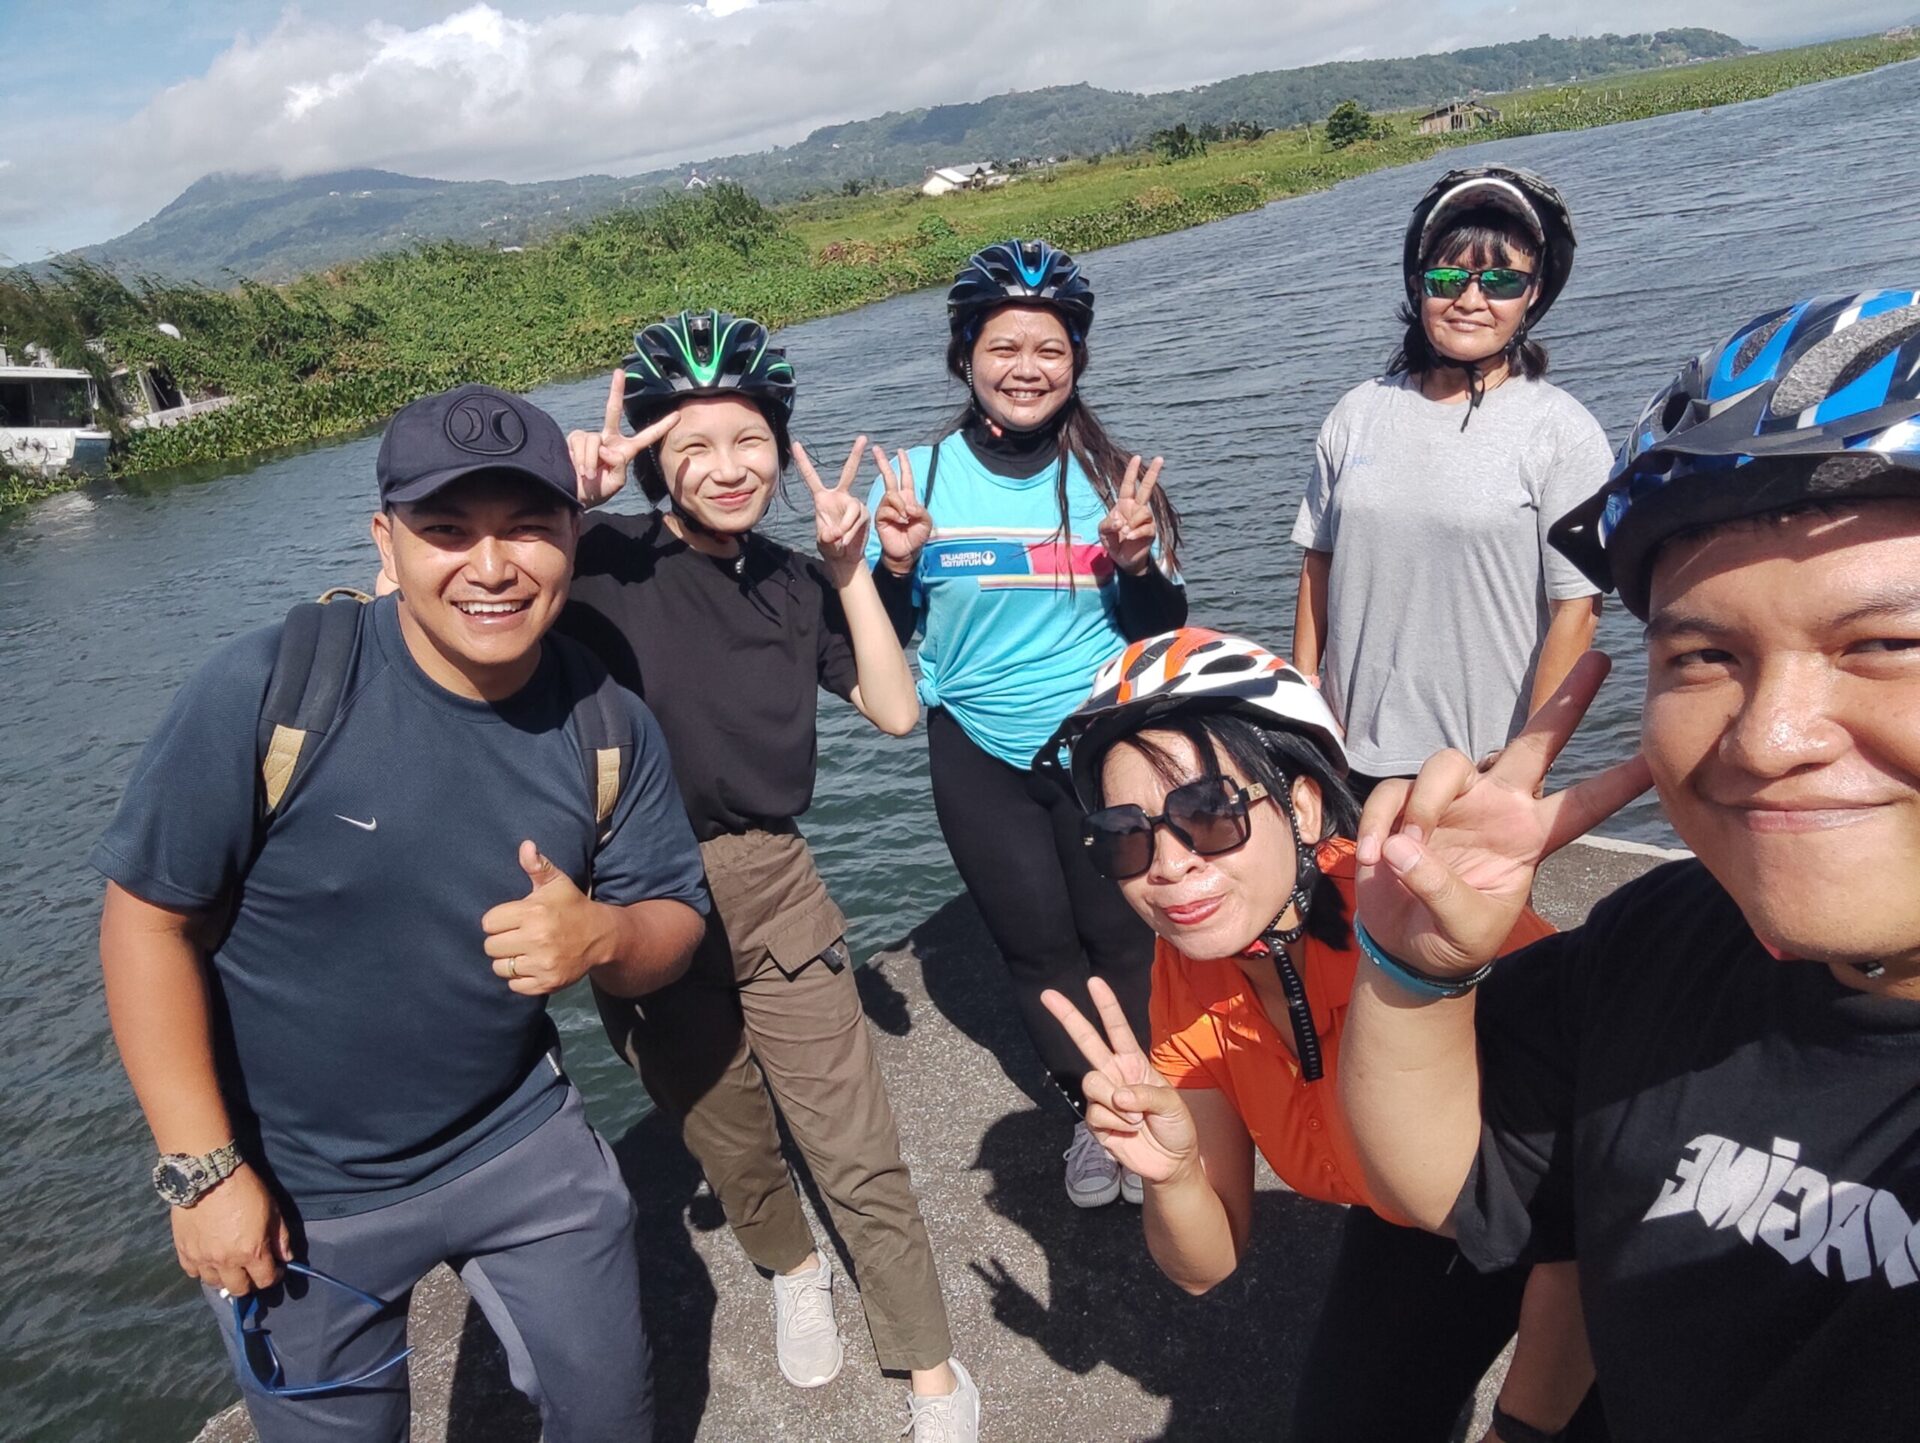 Cycling through Tondano and stopping by the Tondano Lake